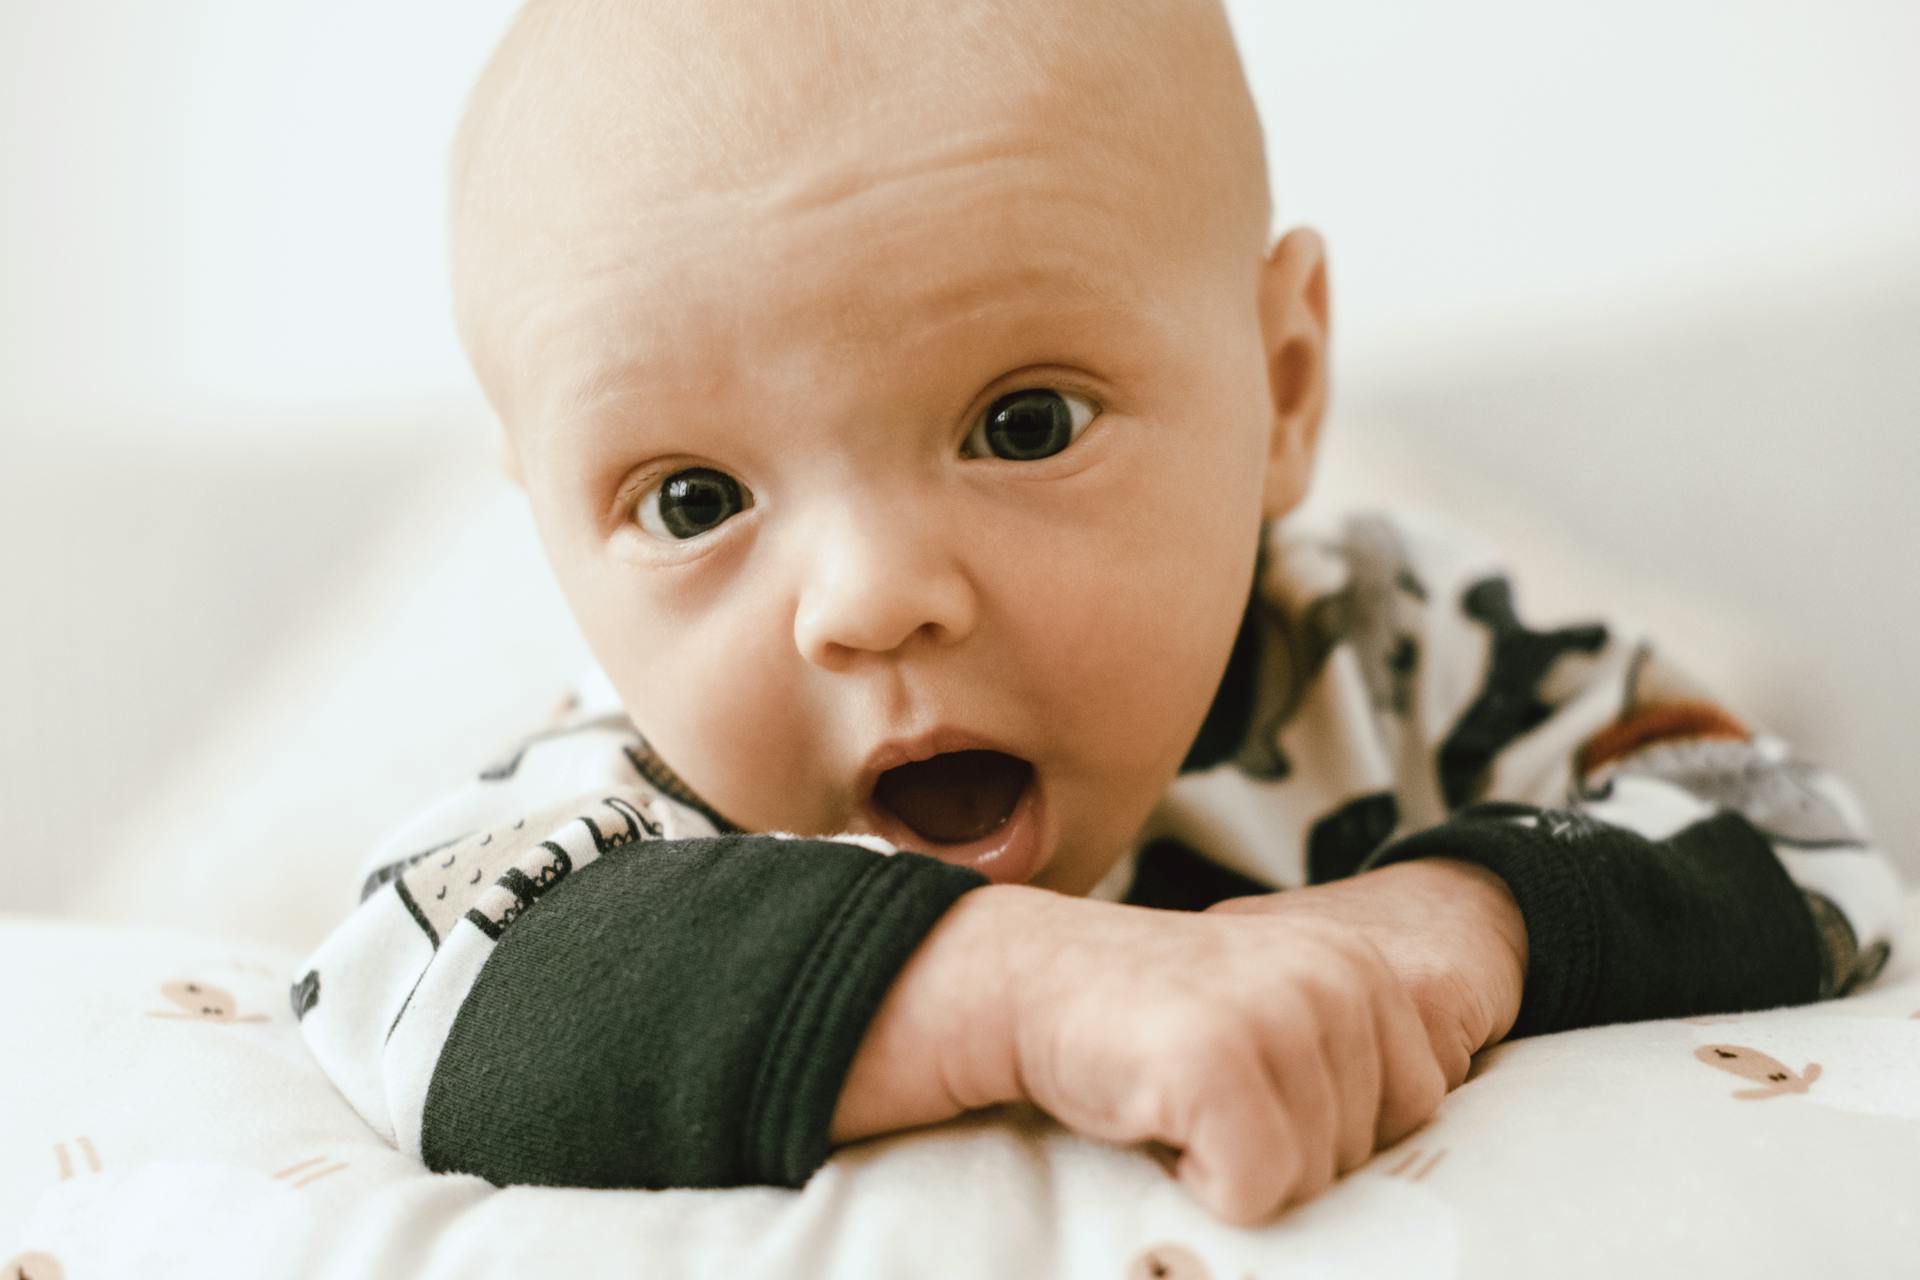 A newborn baby boy | Source: Pexels